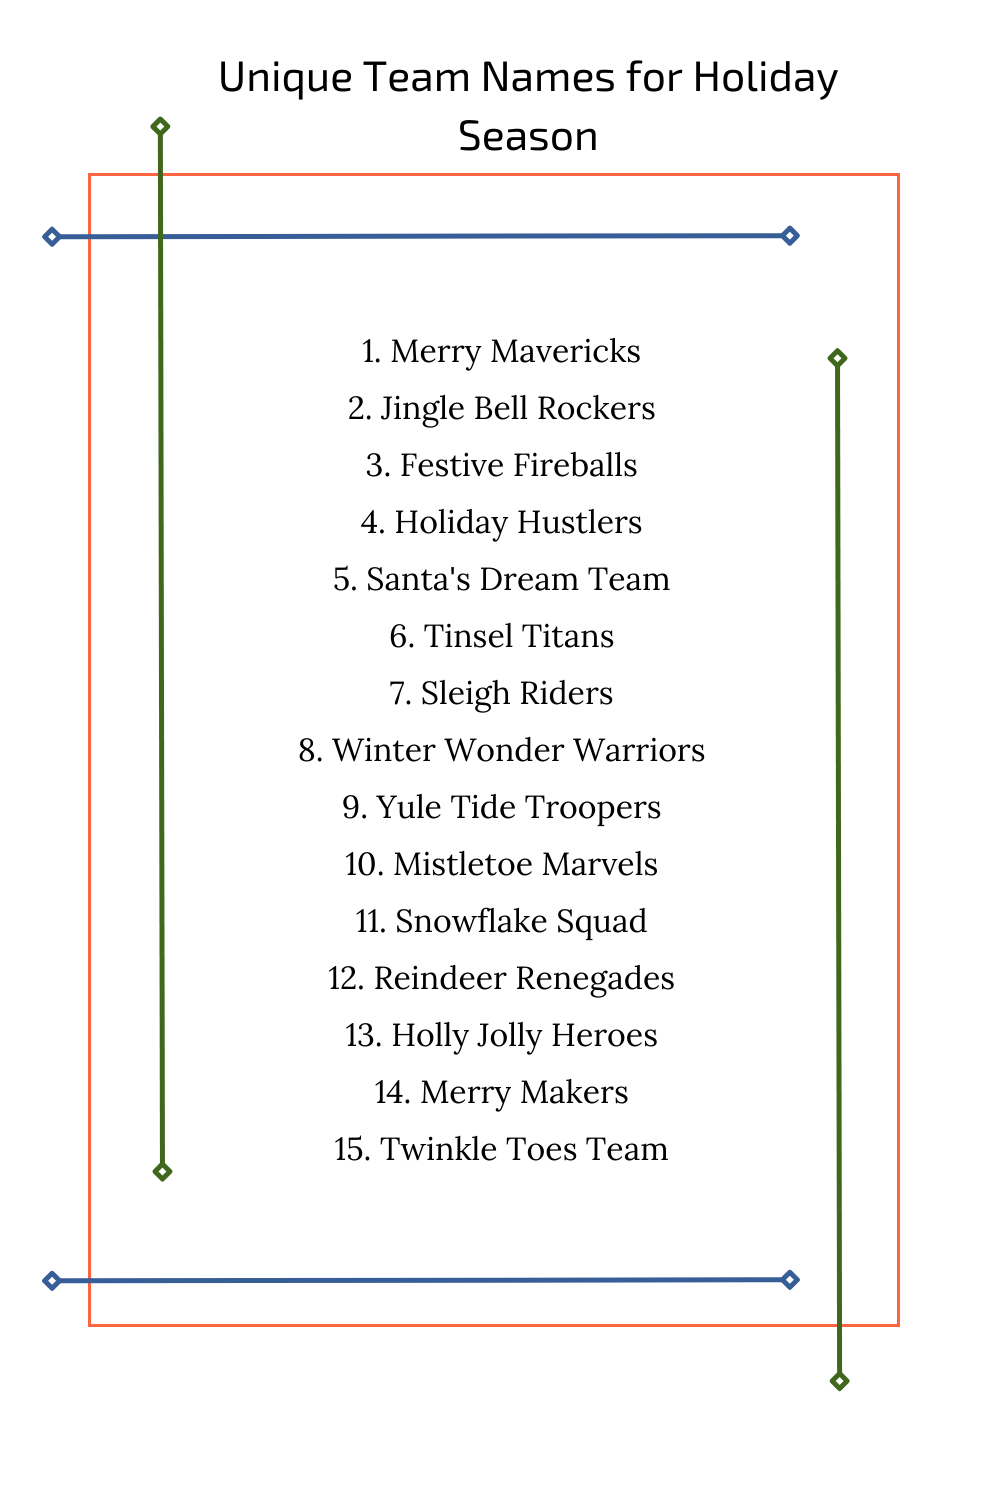 Unique Team Names for Holiday Season